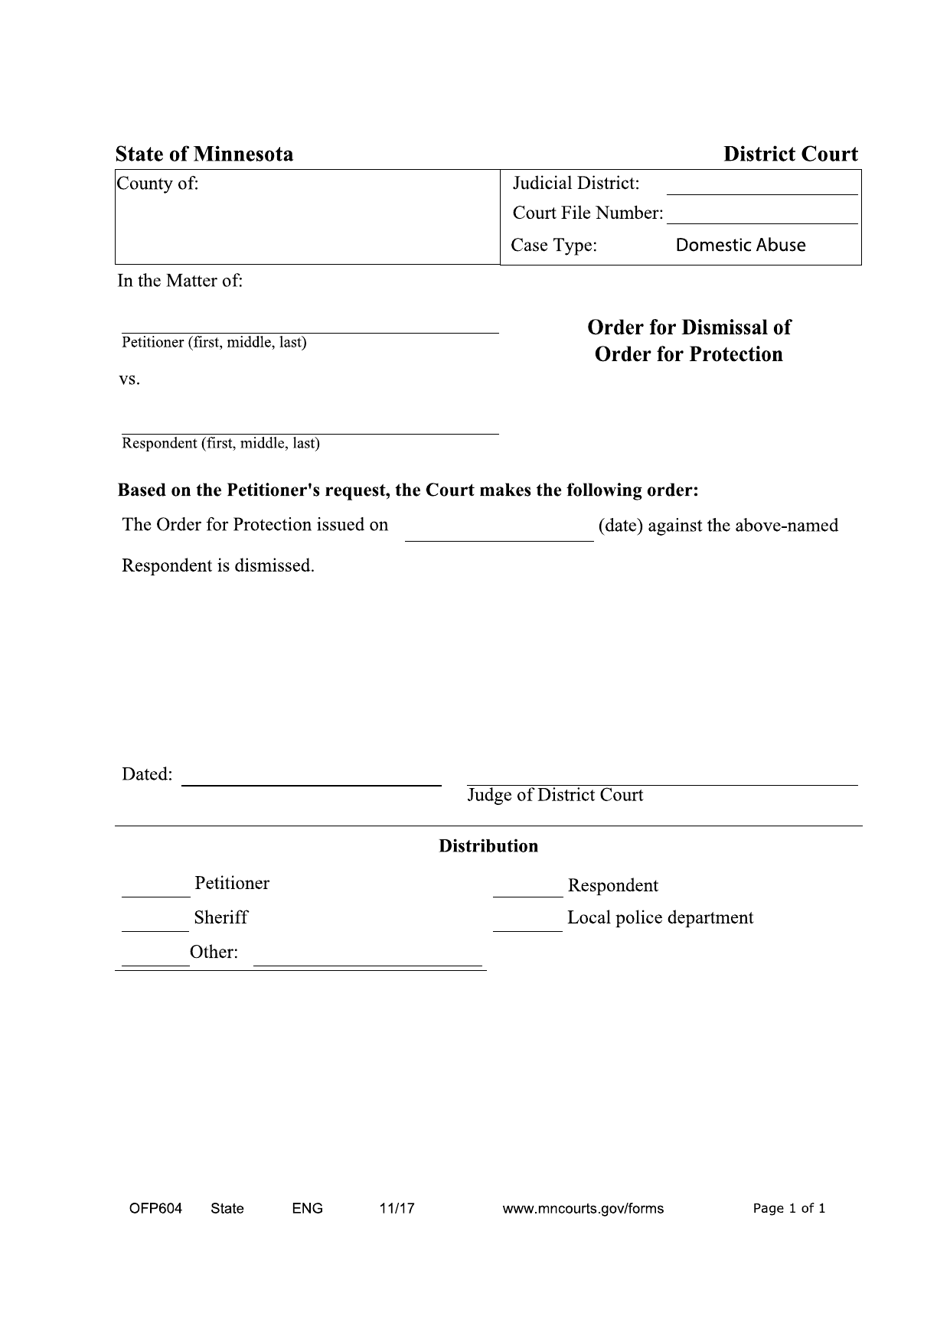 Form OFP604 Order for Dismissal of Order for Protection - Minnesota, Page 1